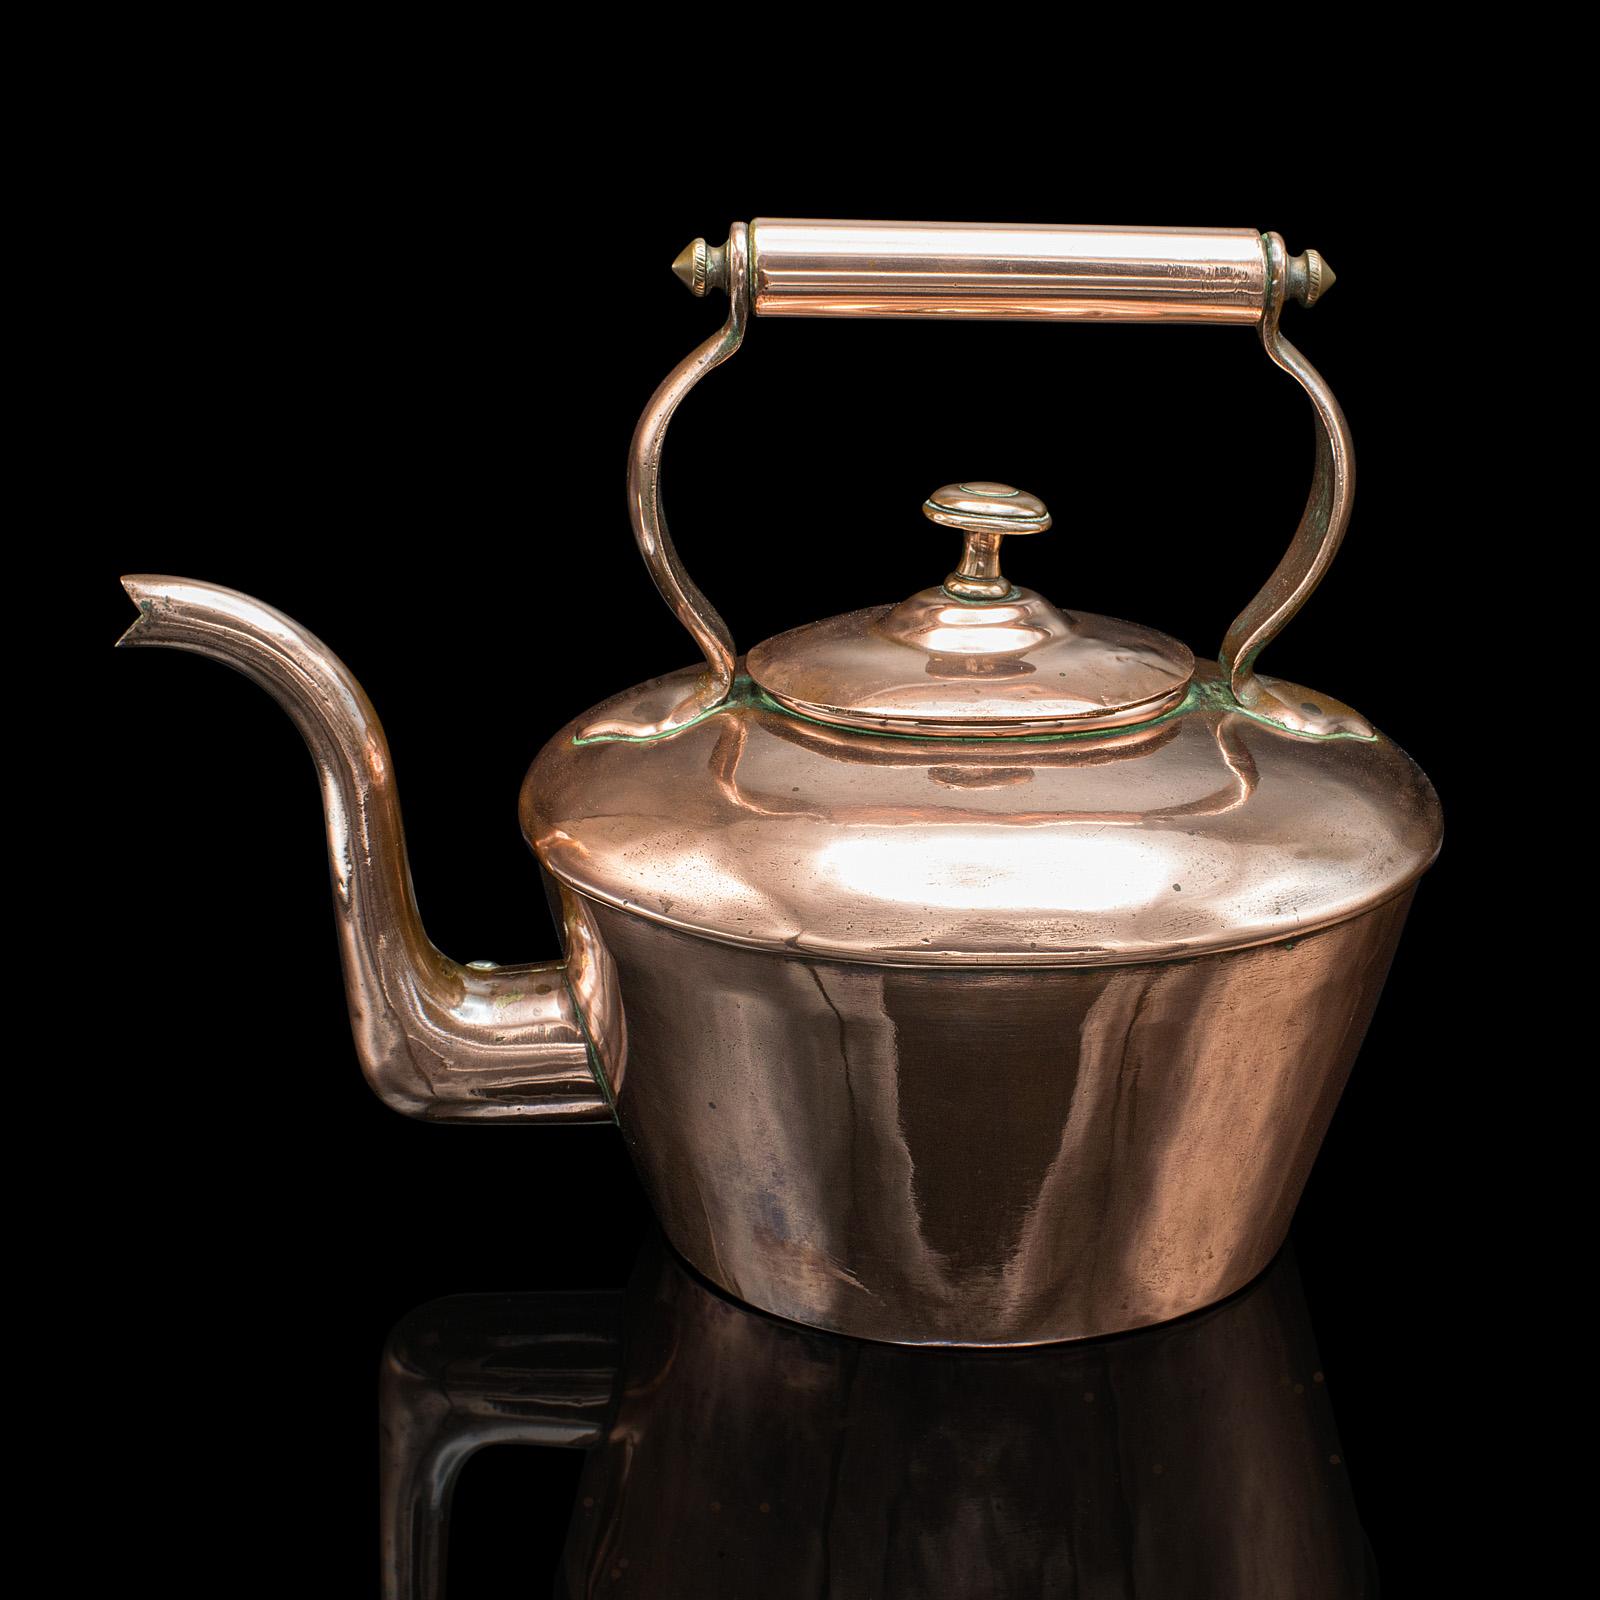 British Antique Scullery Kettle, English, Copper, Stovetop Teapot, Victorian, Circa 1870 For Sale